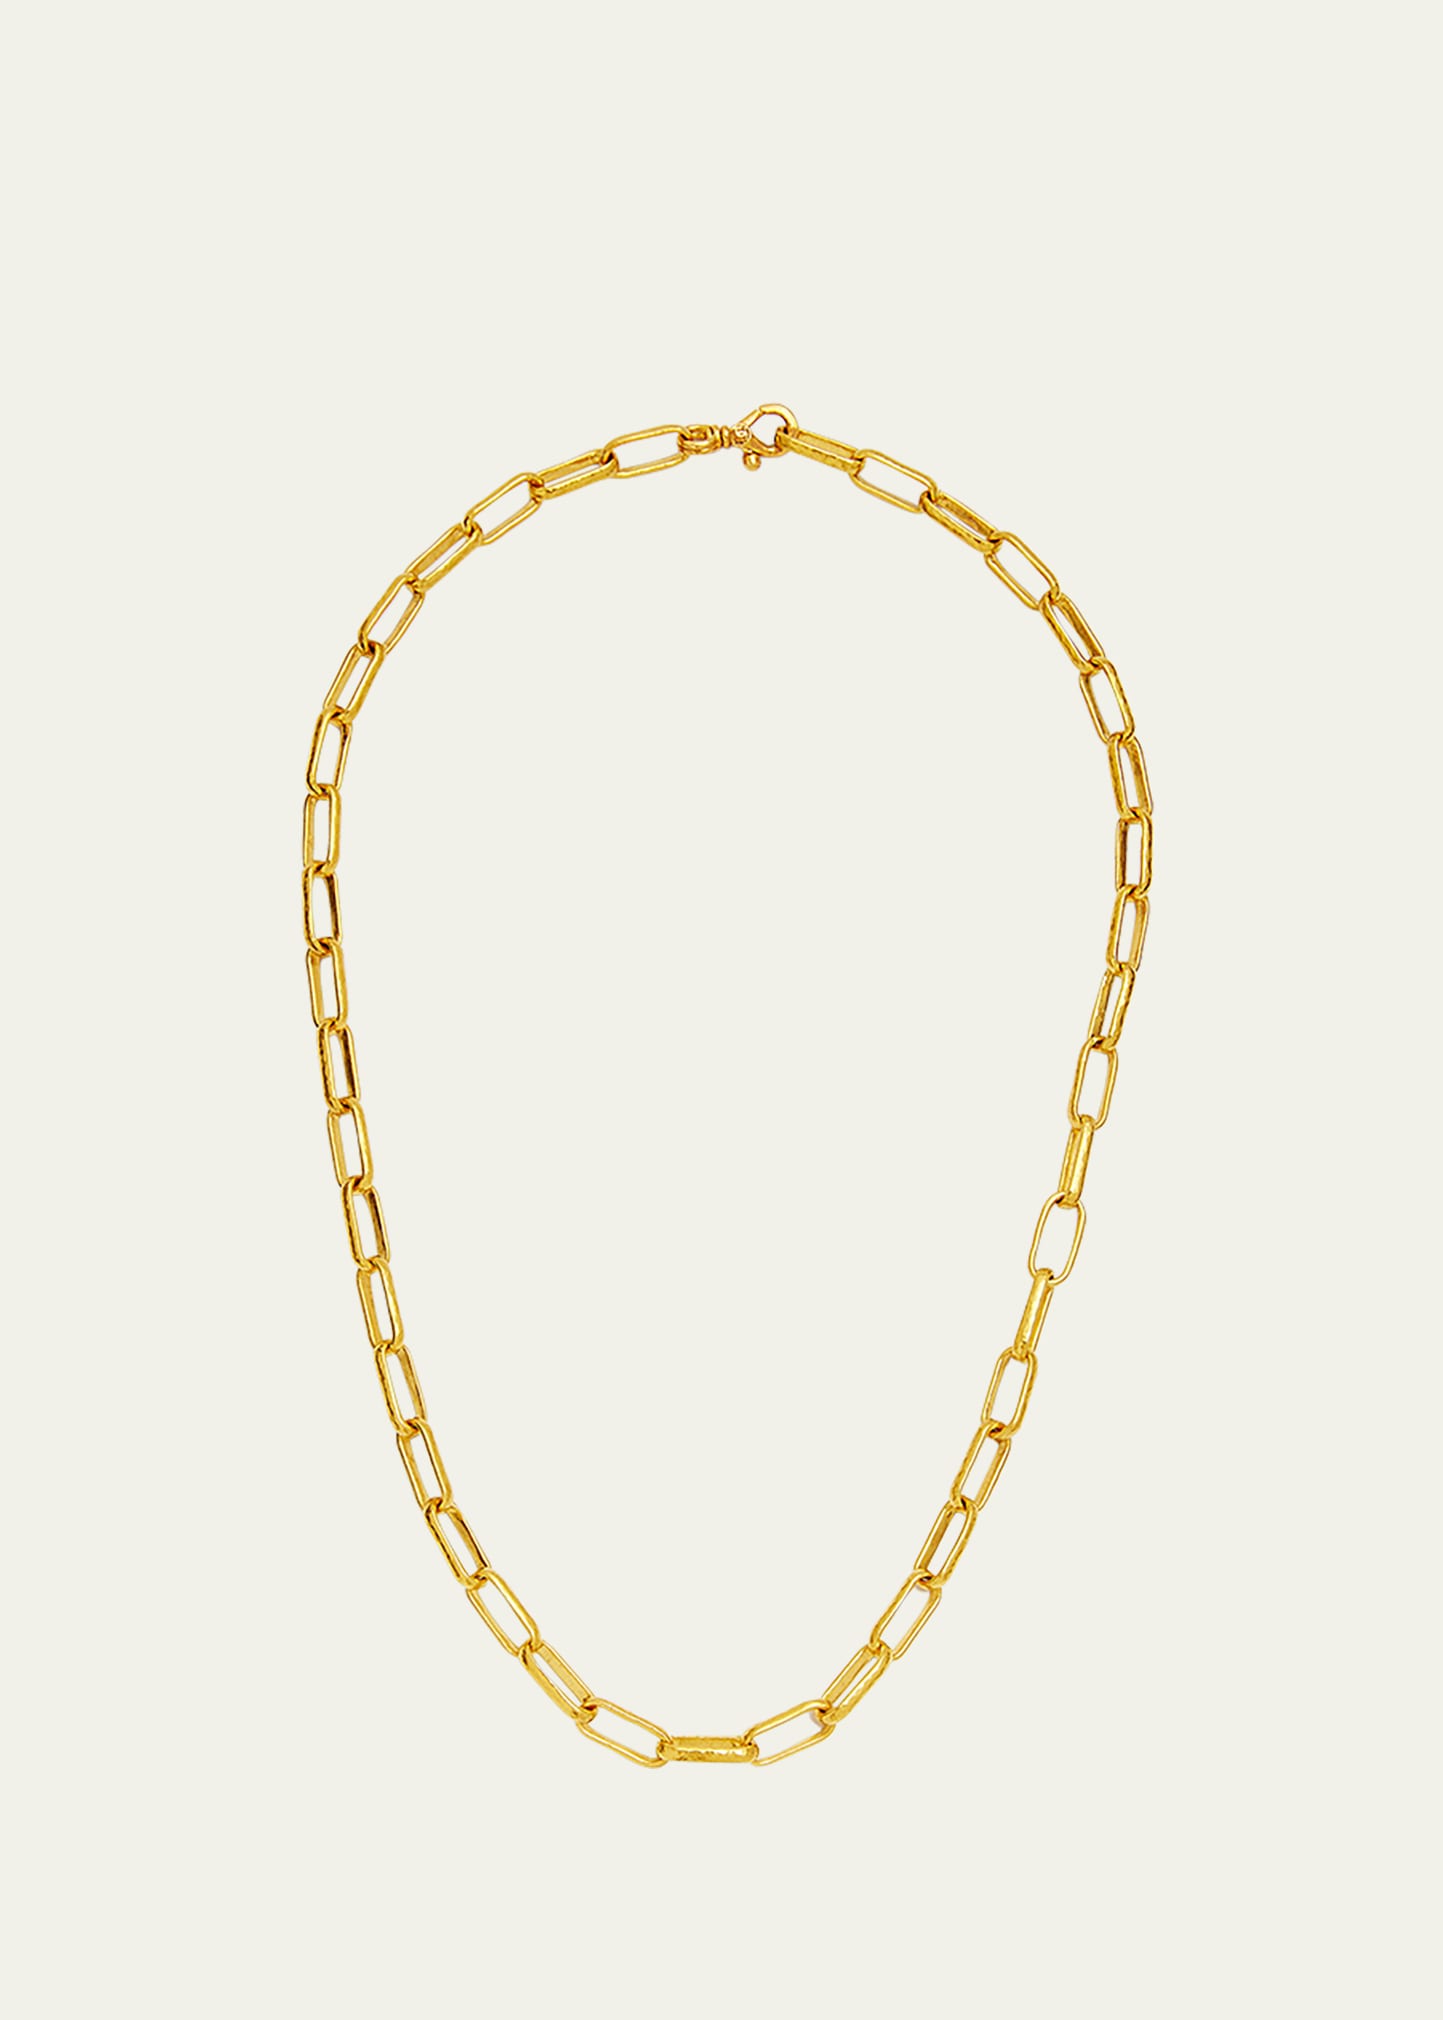 Gurhan Men's 24K Yellow Gold Chain Necklace, 20"L